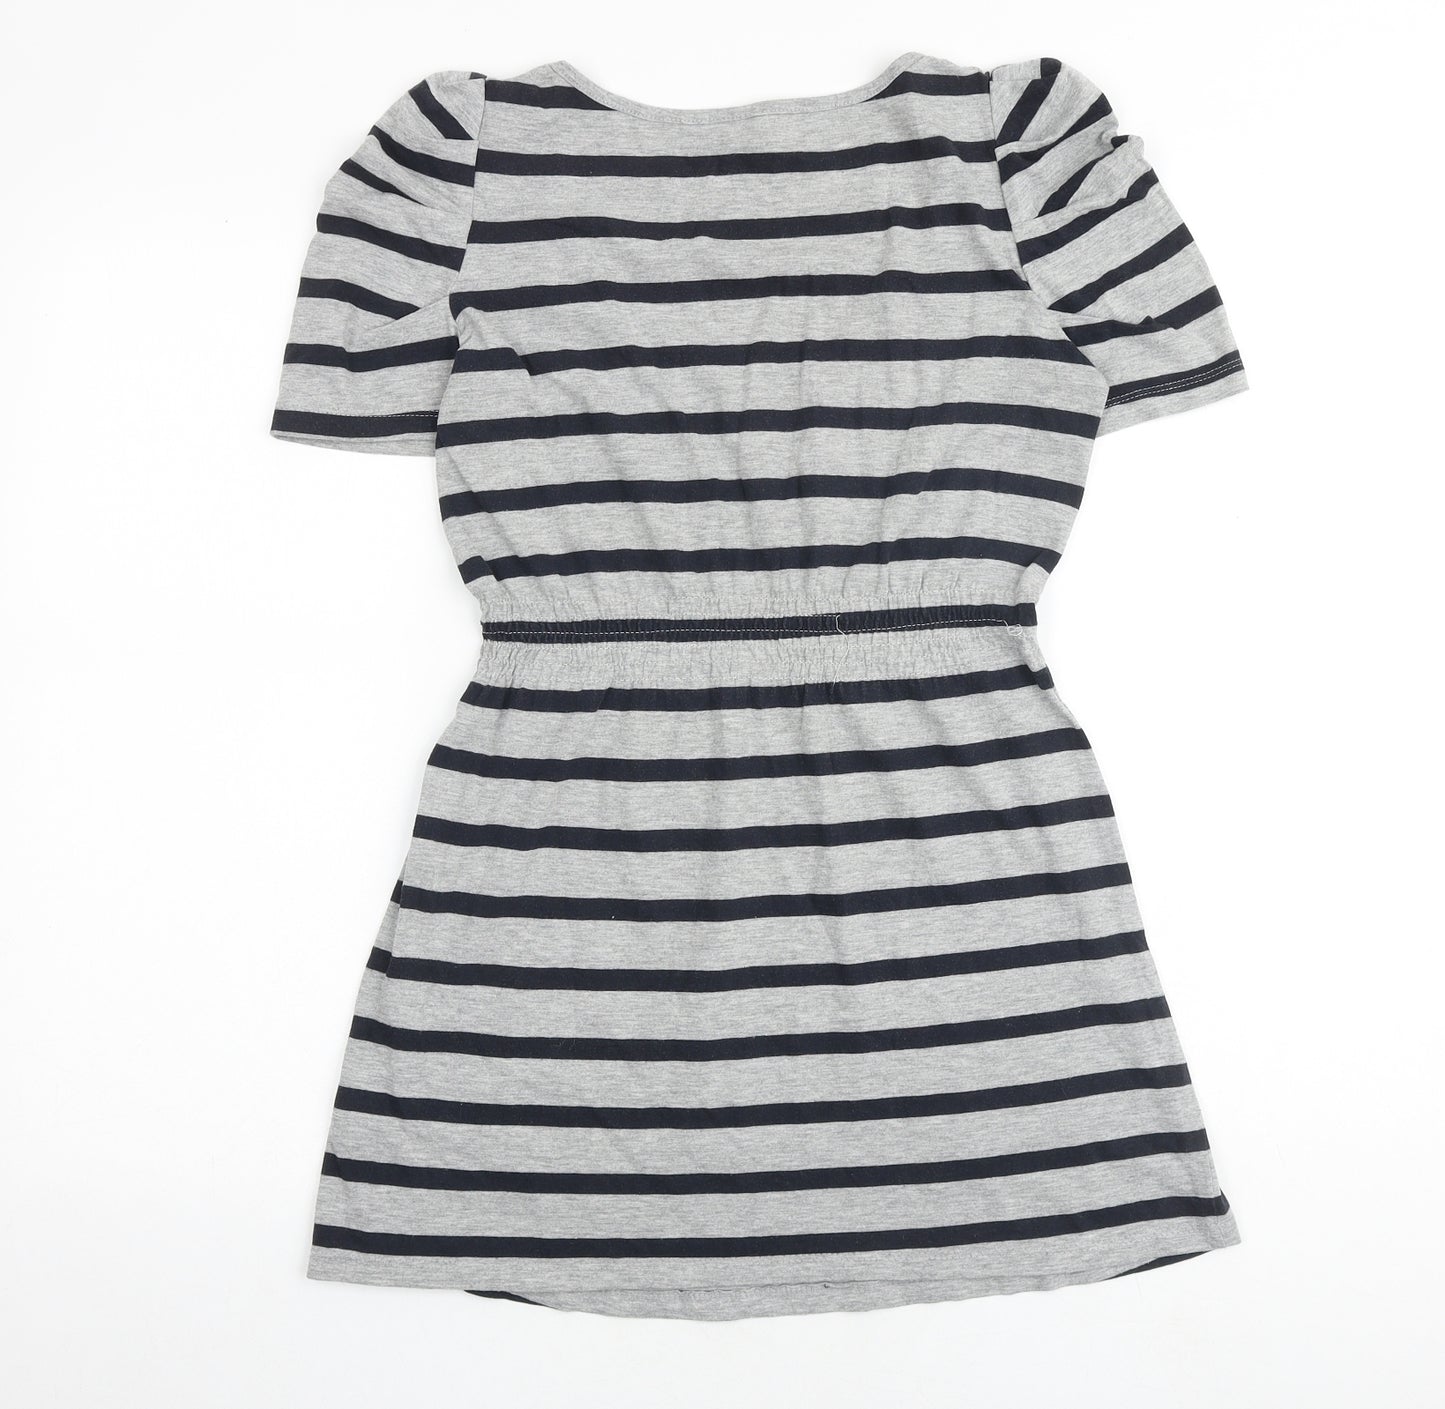 NEXT Womens Grey Striped Cotton T-Shirt Dress Size 8 V-Neck Pullover